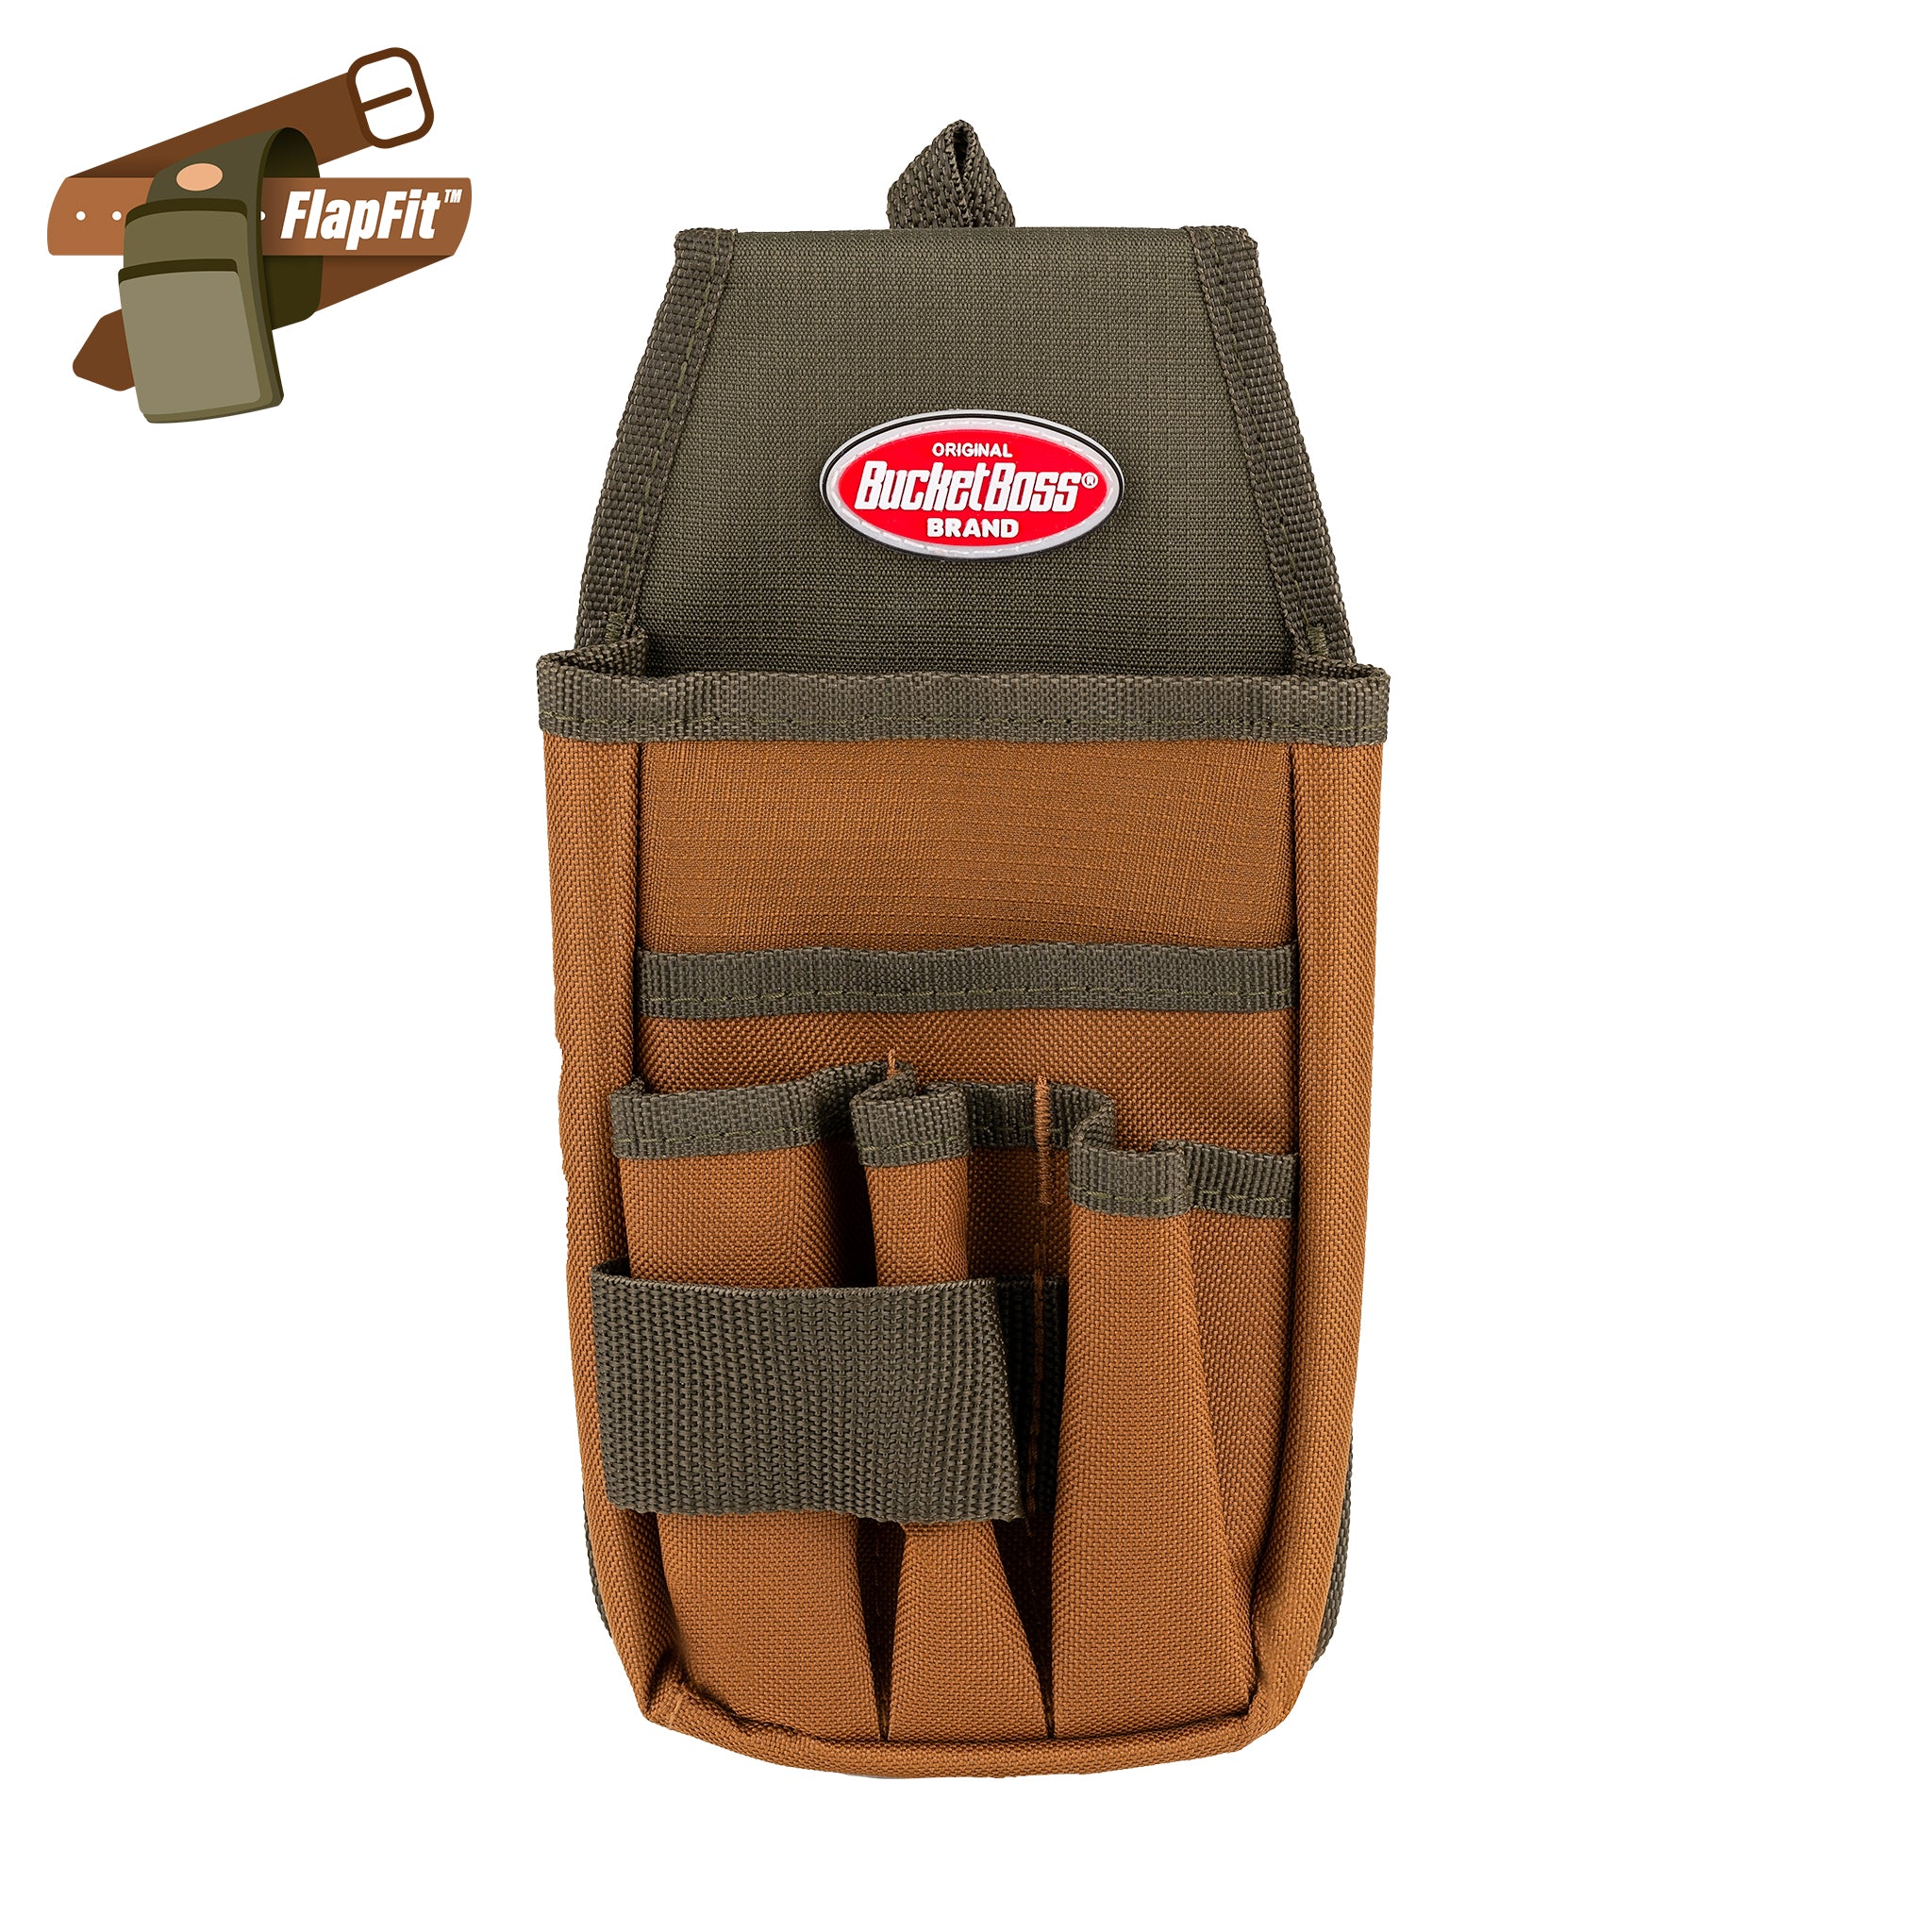 Bucket Boss 54120 Rear Guard Pouch with FlapFit — Coastal Tool